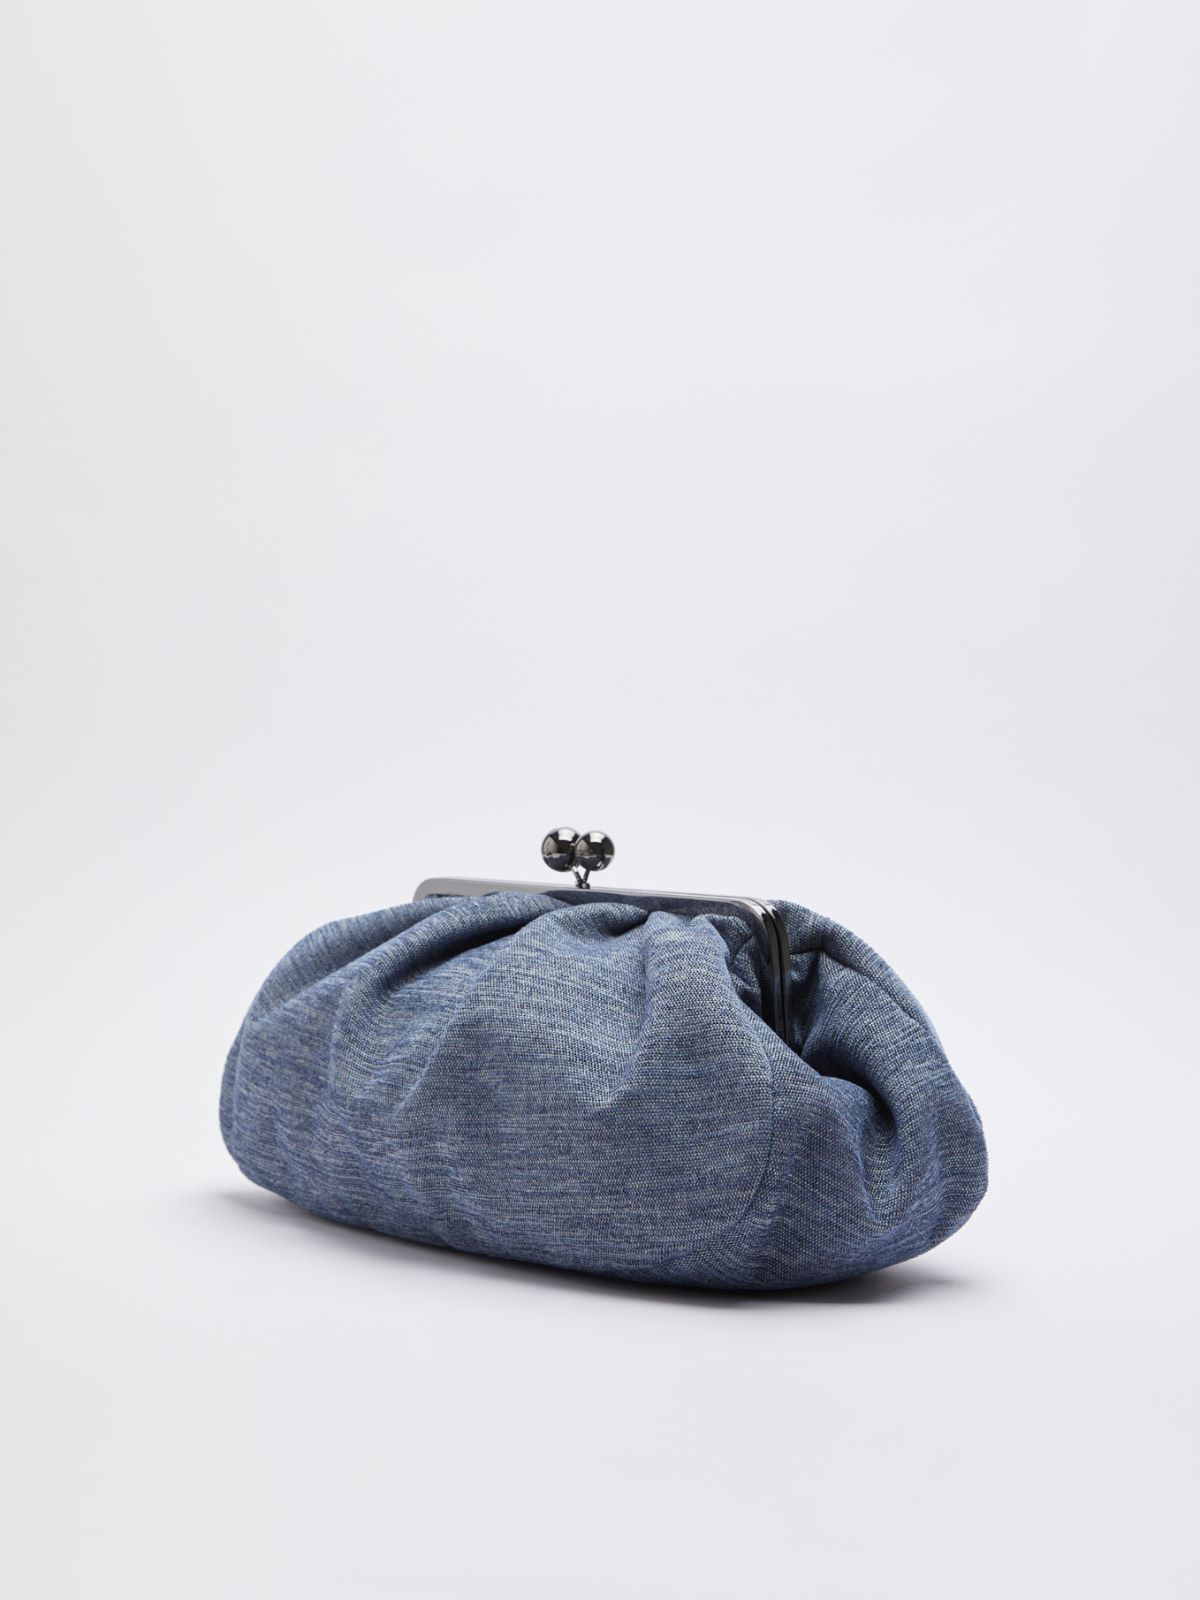 Pasticcino Bag Large in cotone jacquard - AVIO - Weekend Max Mara - 2